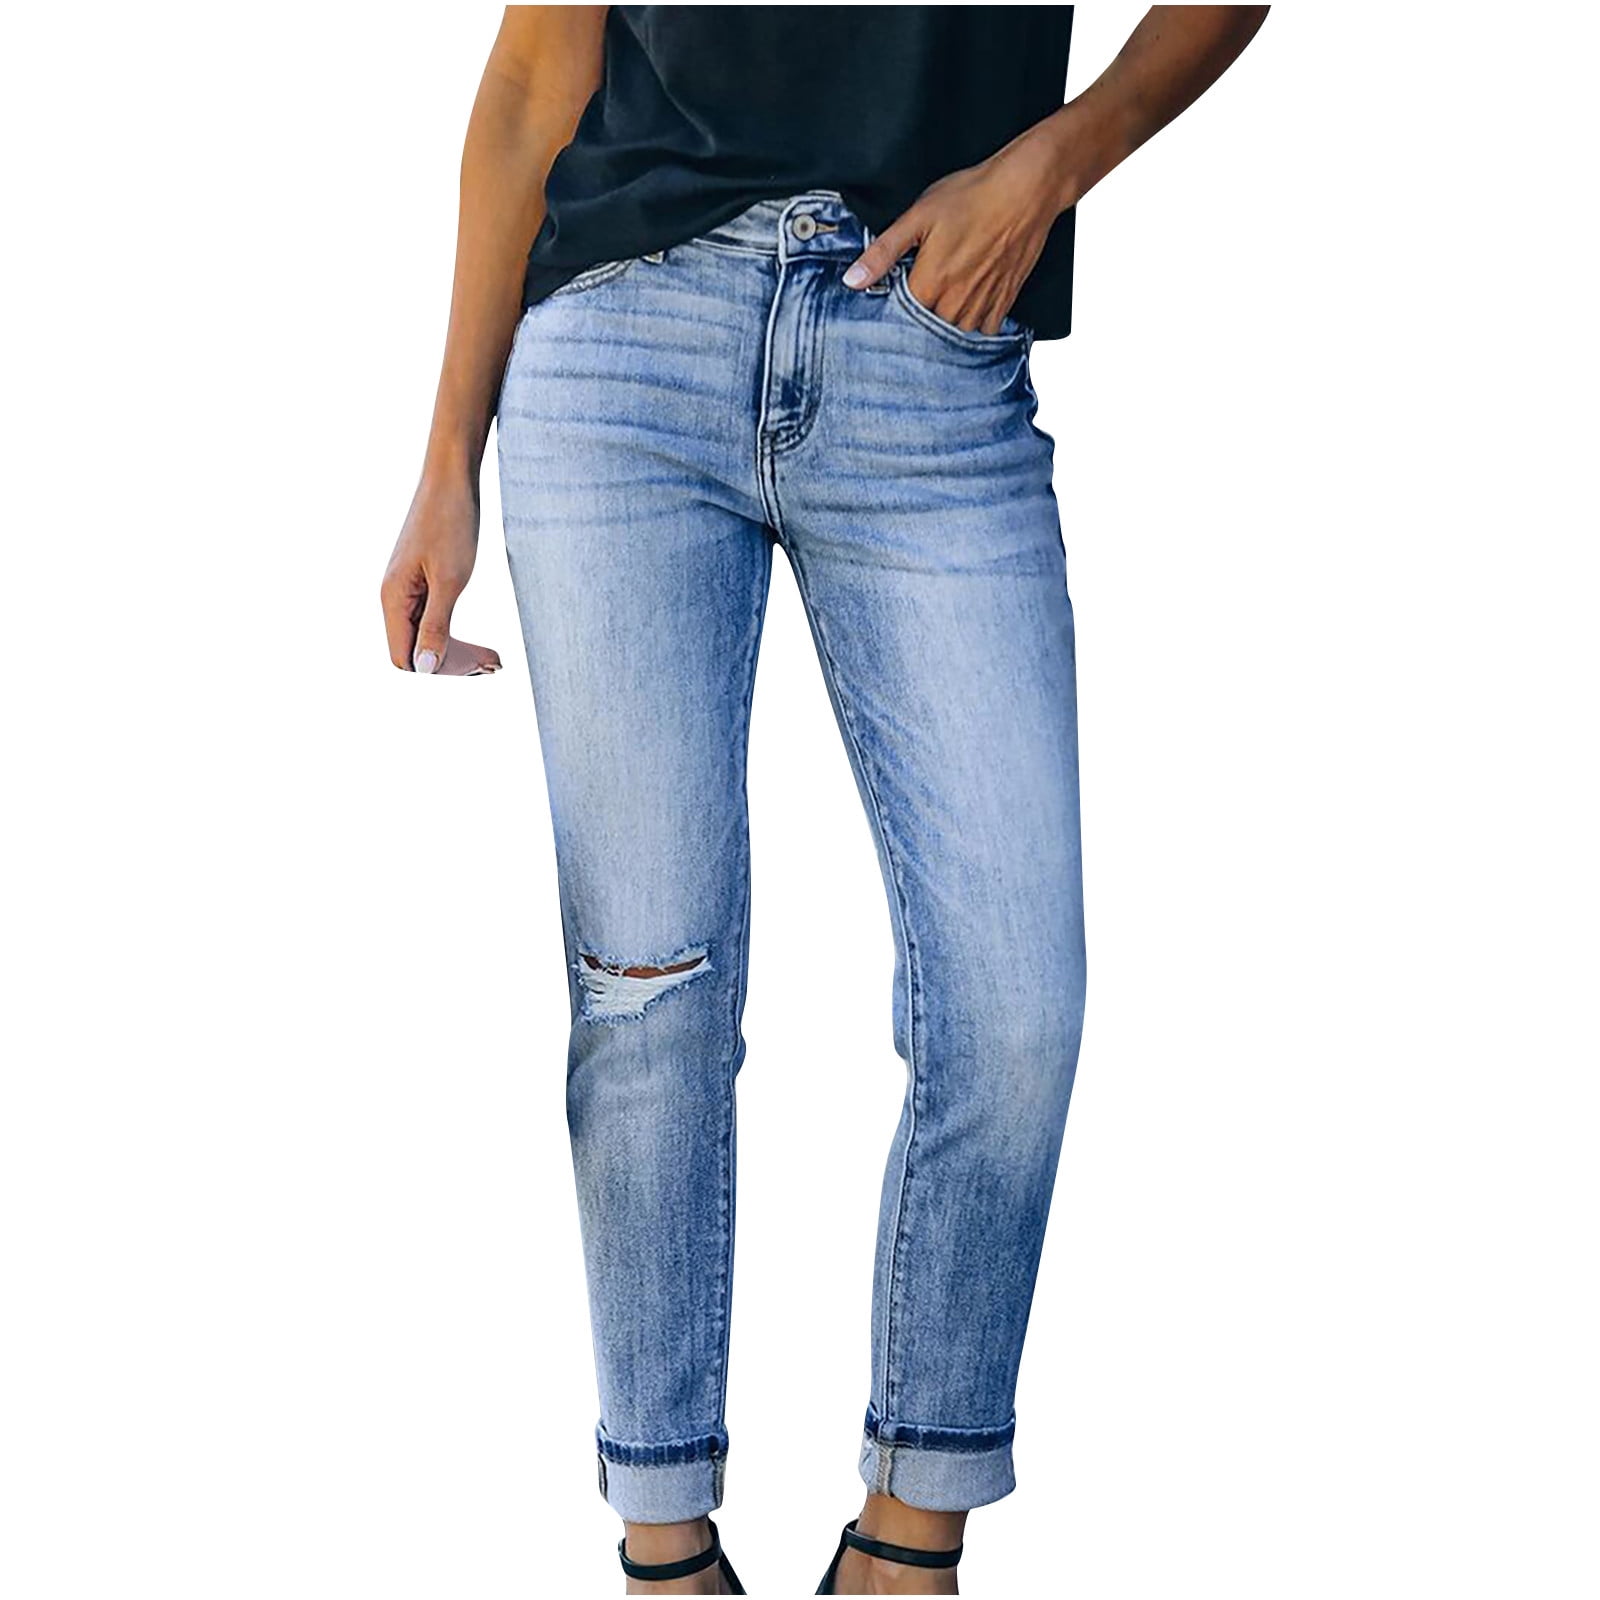 Bigersell Women's Low Pro Pants Full Length Pants Fashion Women